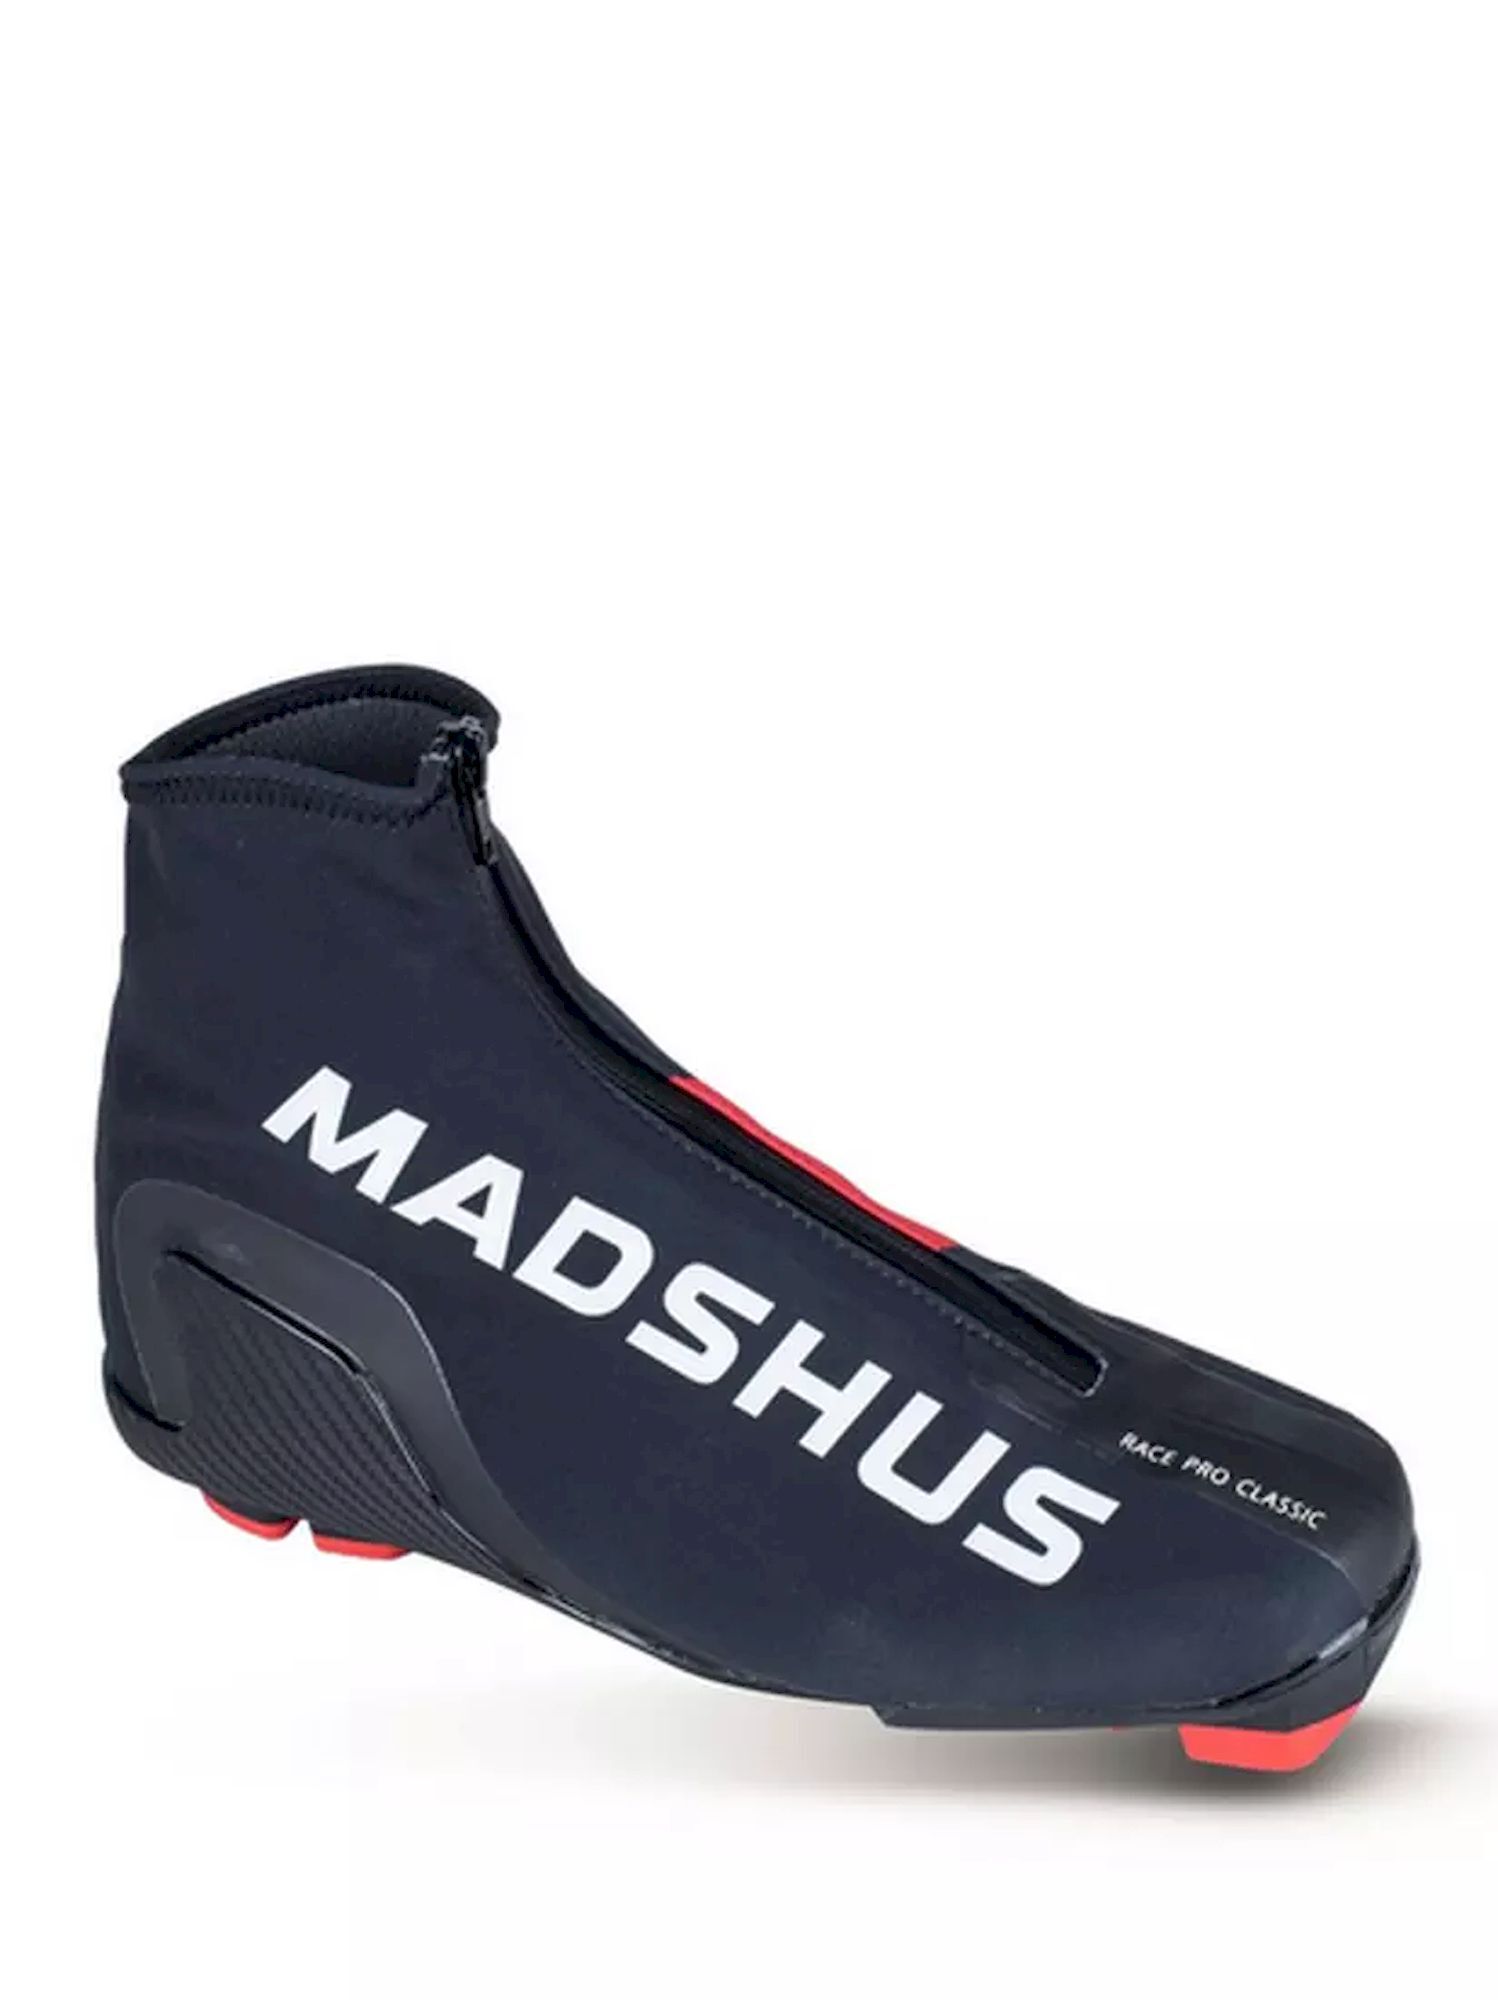 Madshus Race Pro Classic - Boty na běžky | Hardloop